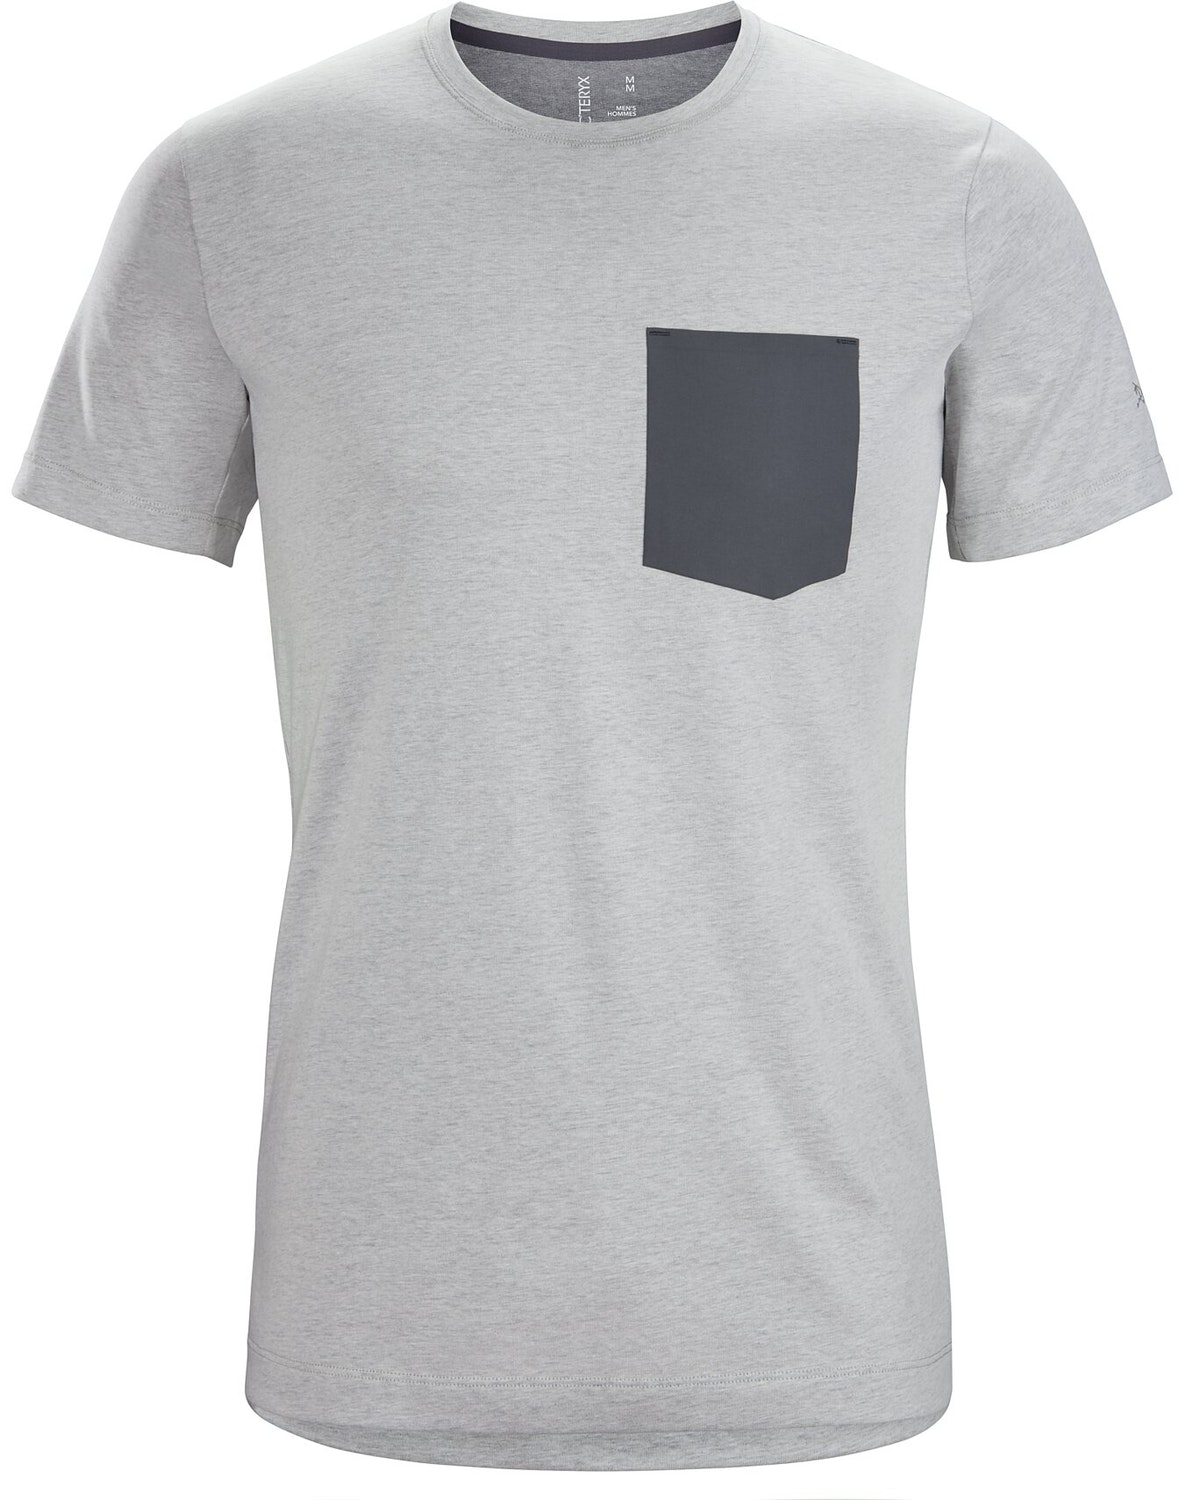 T-shirt Arc'teryx Eris Uomo Grigie - IT-3161439